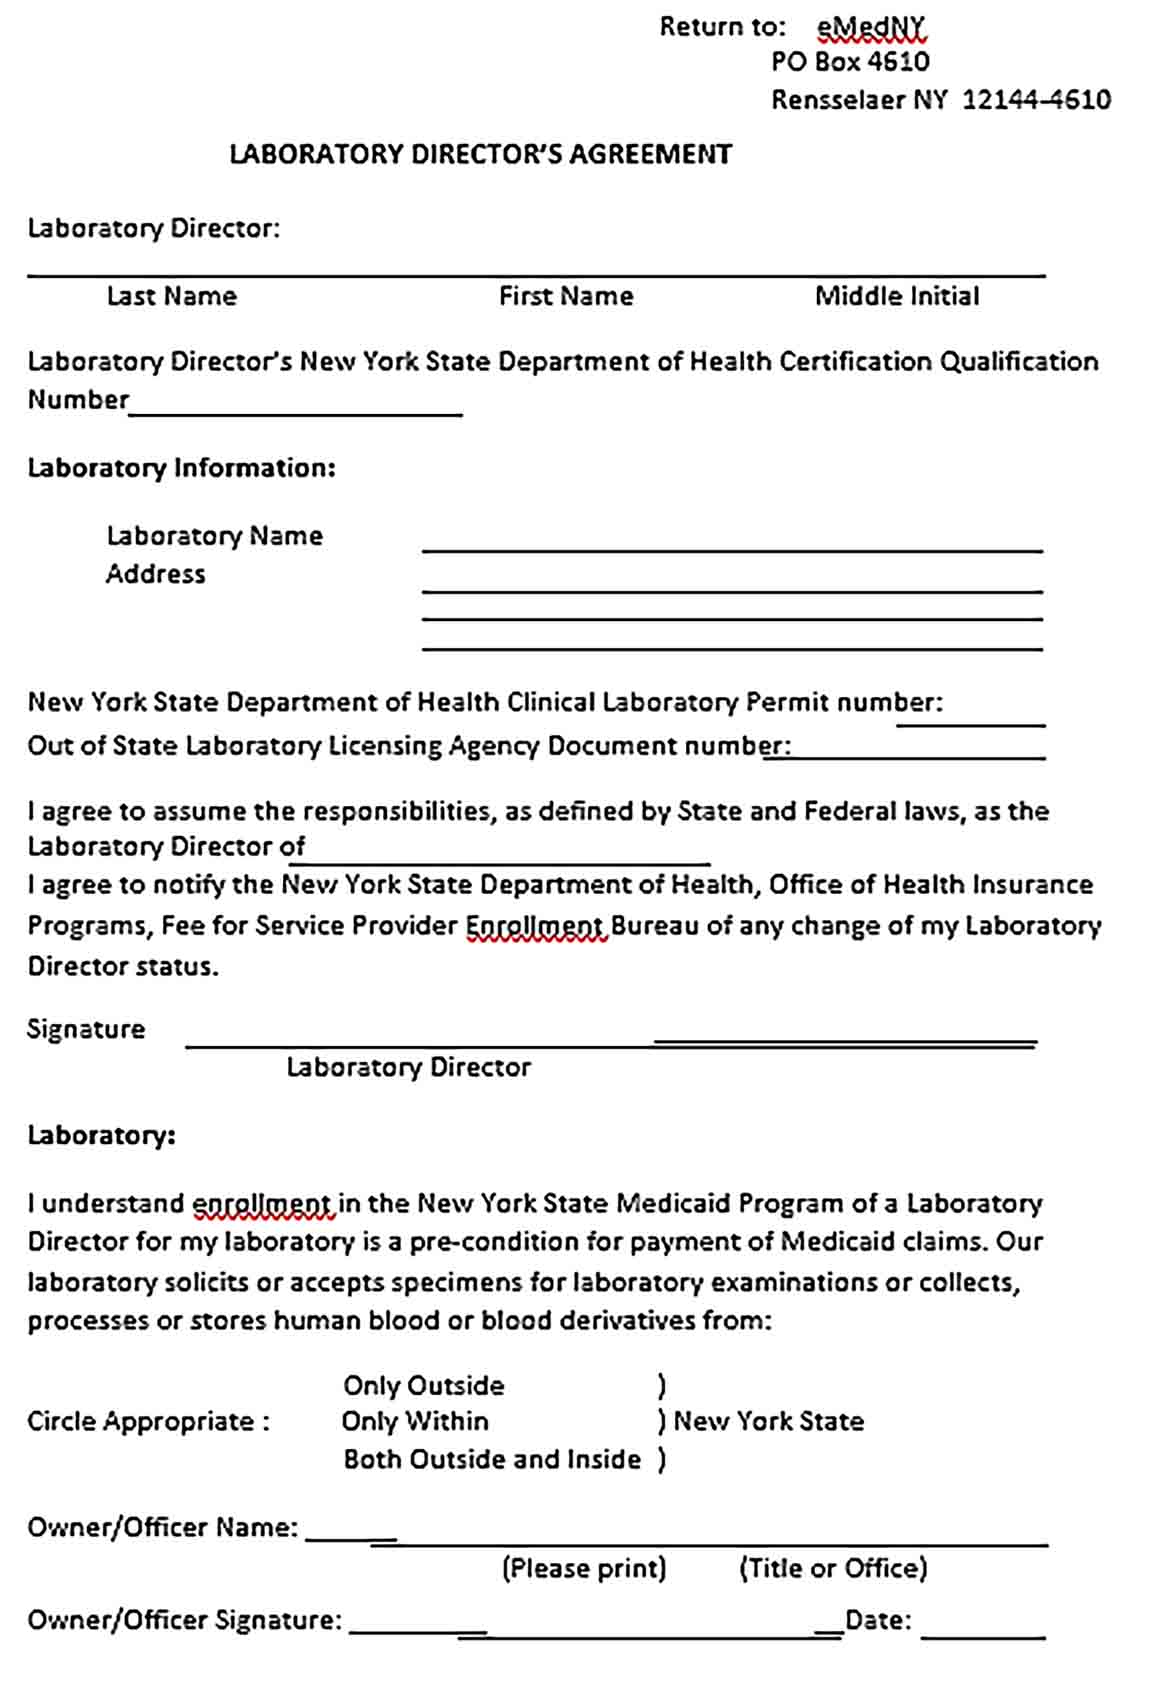 Sample Laboratory Director Agreement